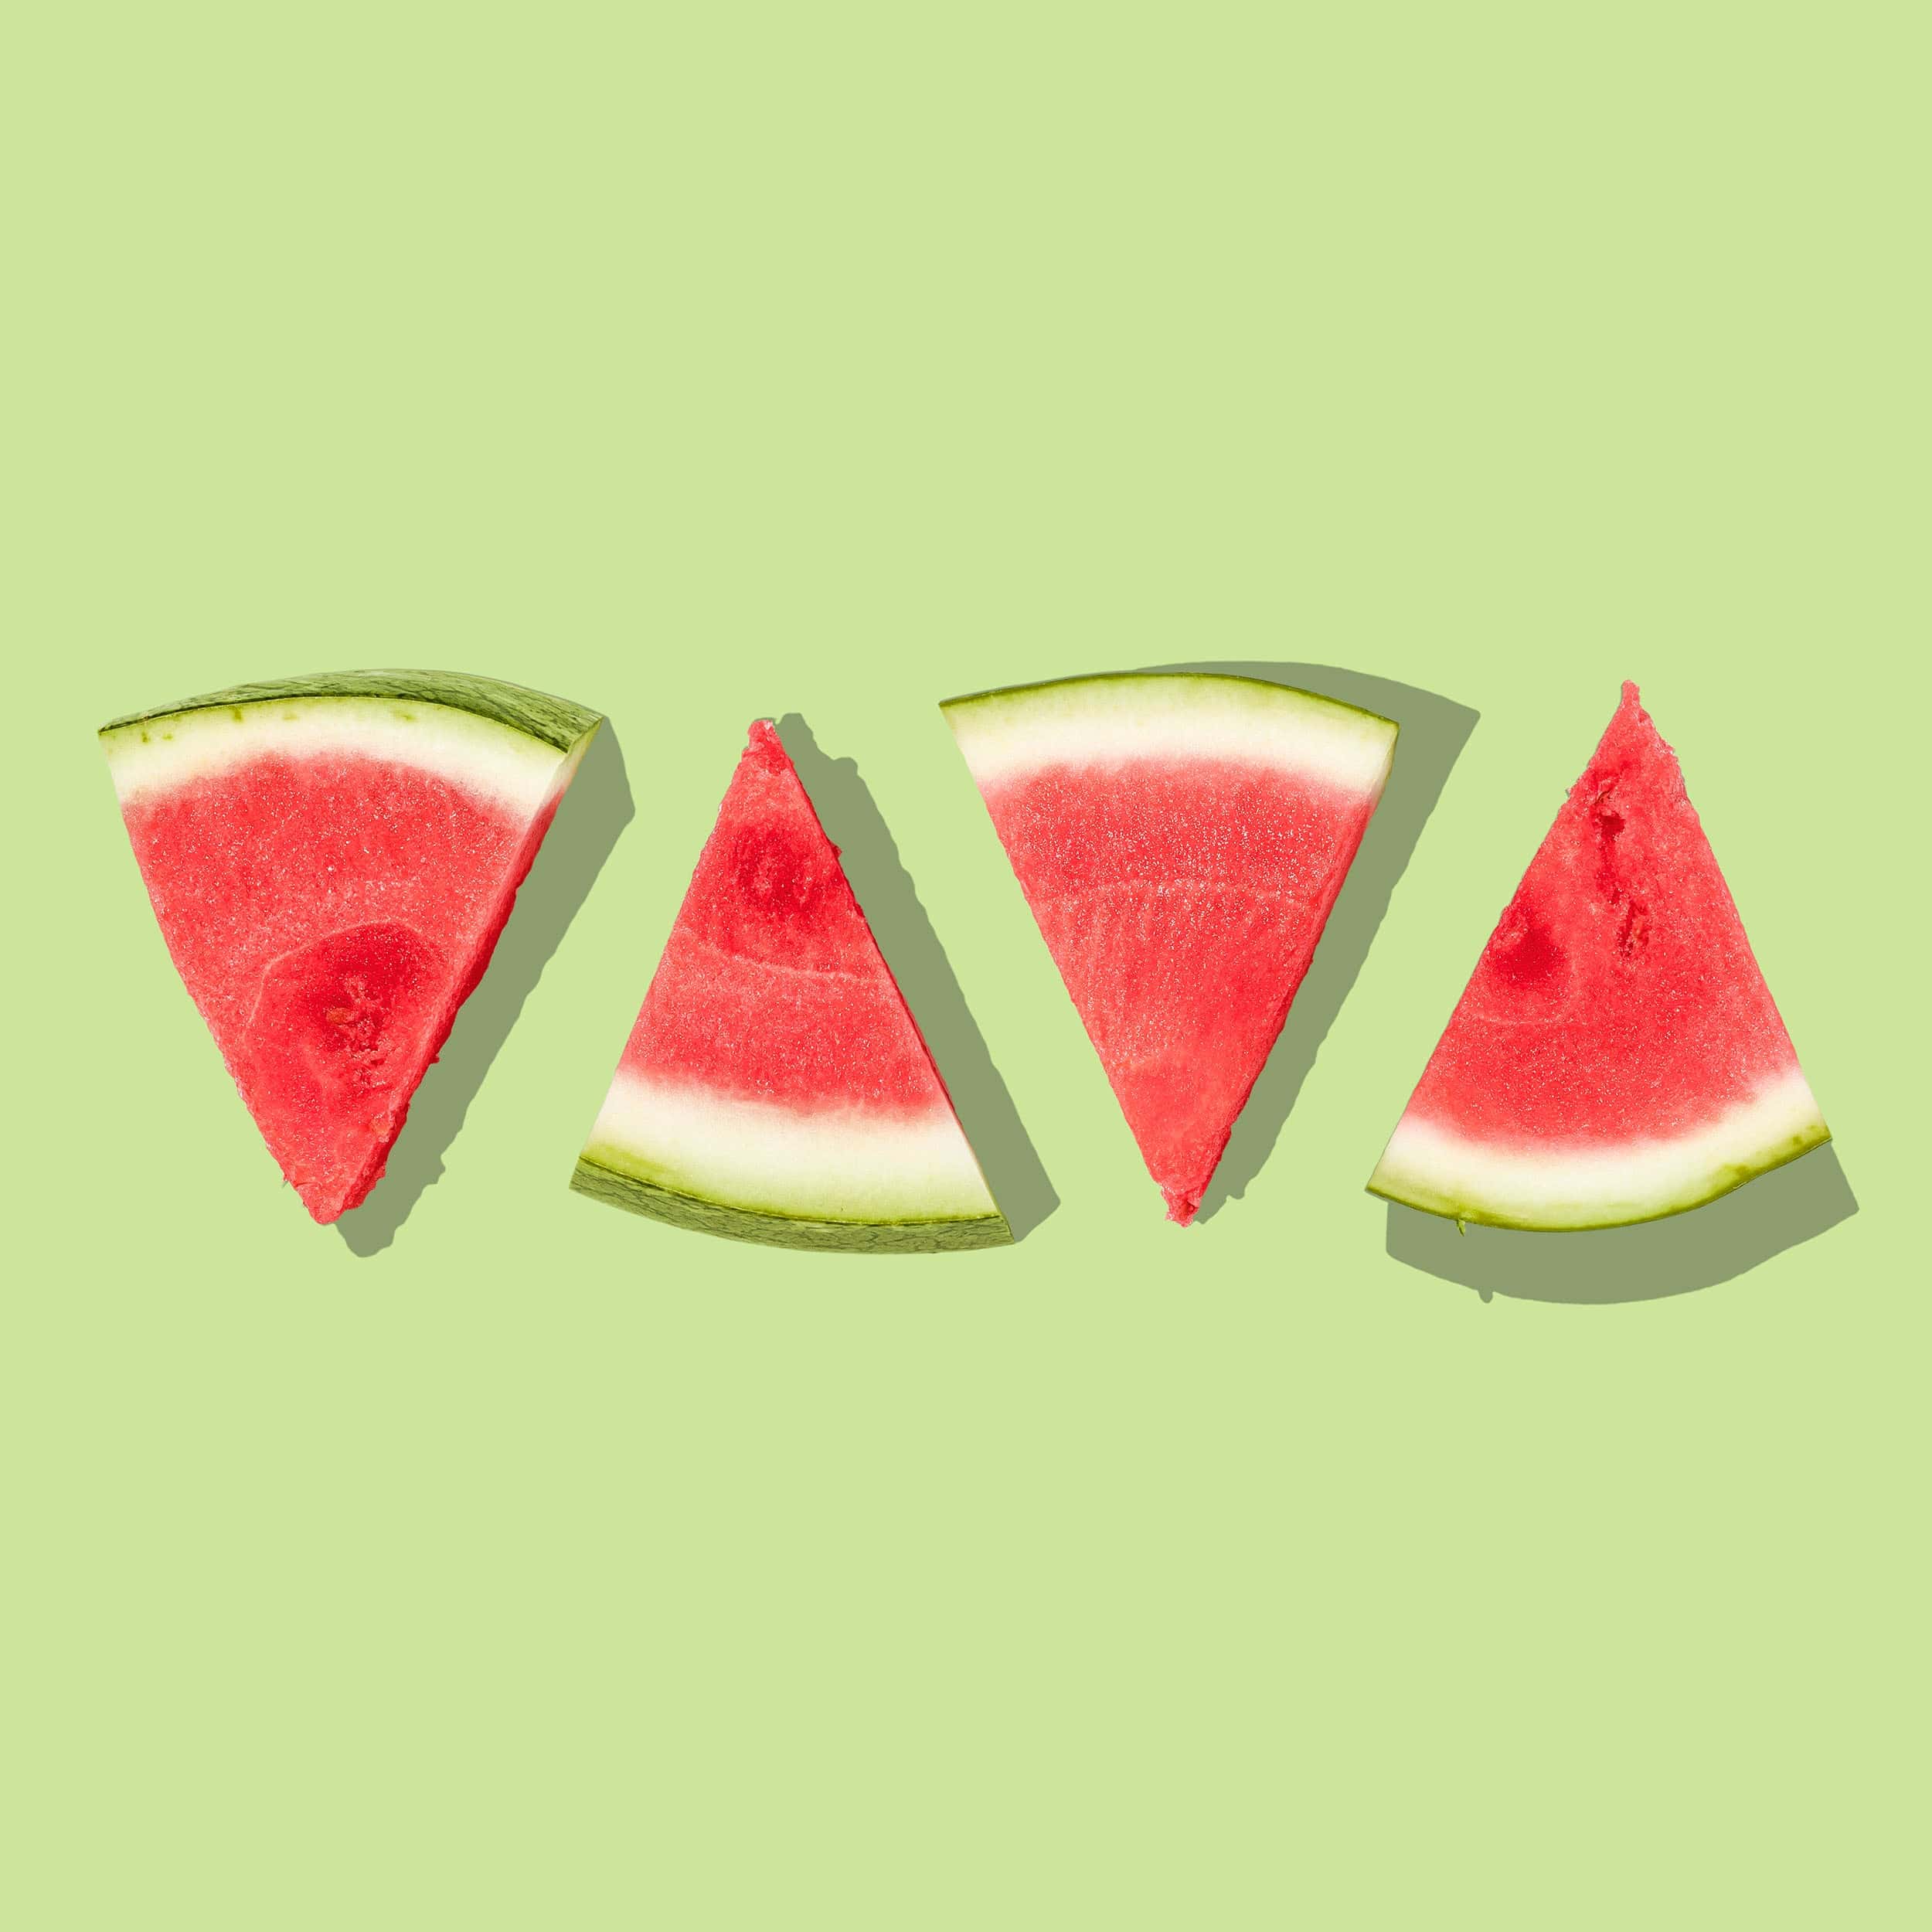 Protein slush ice med vandmelon og kun 2 ingredienser